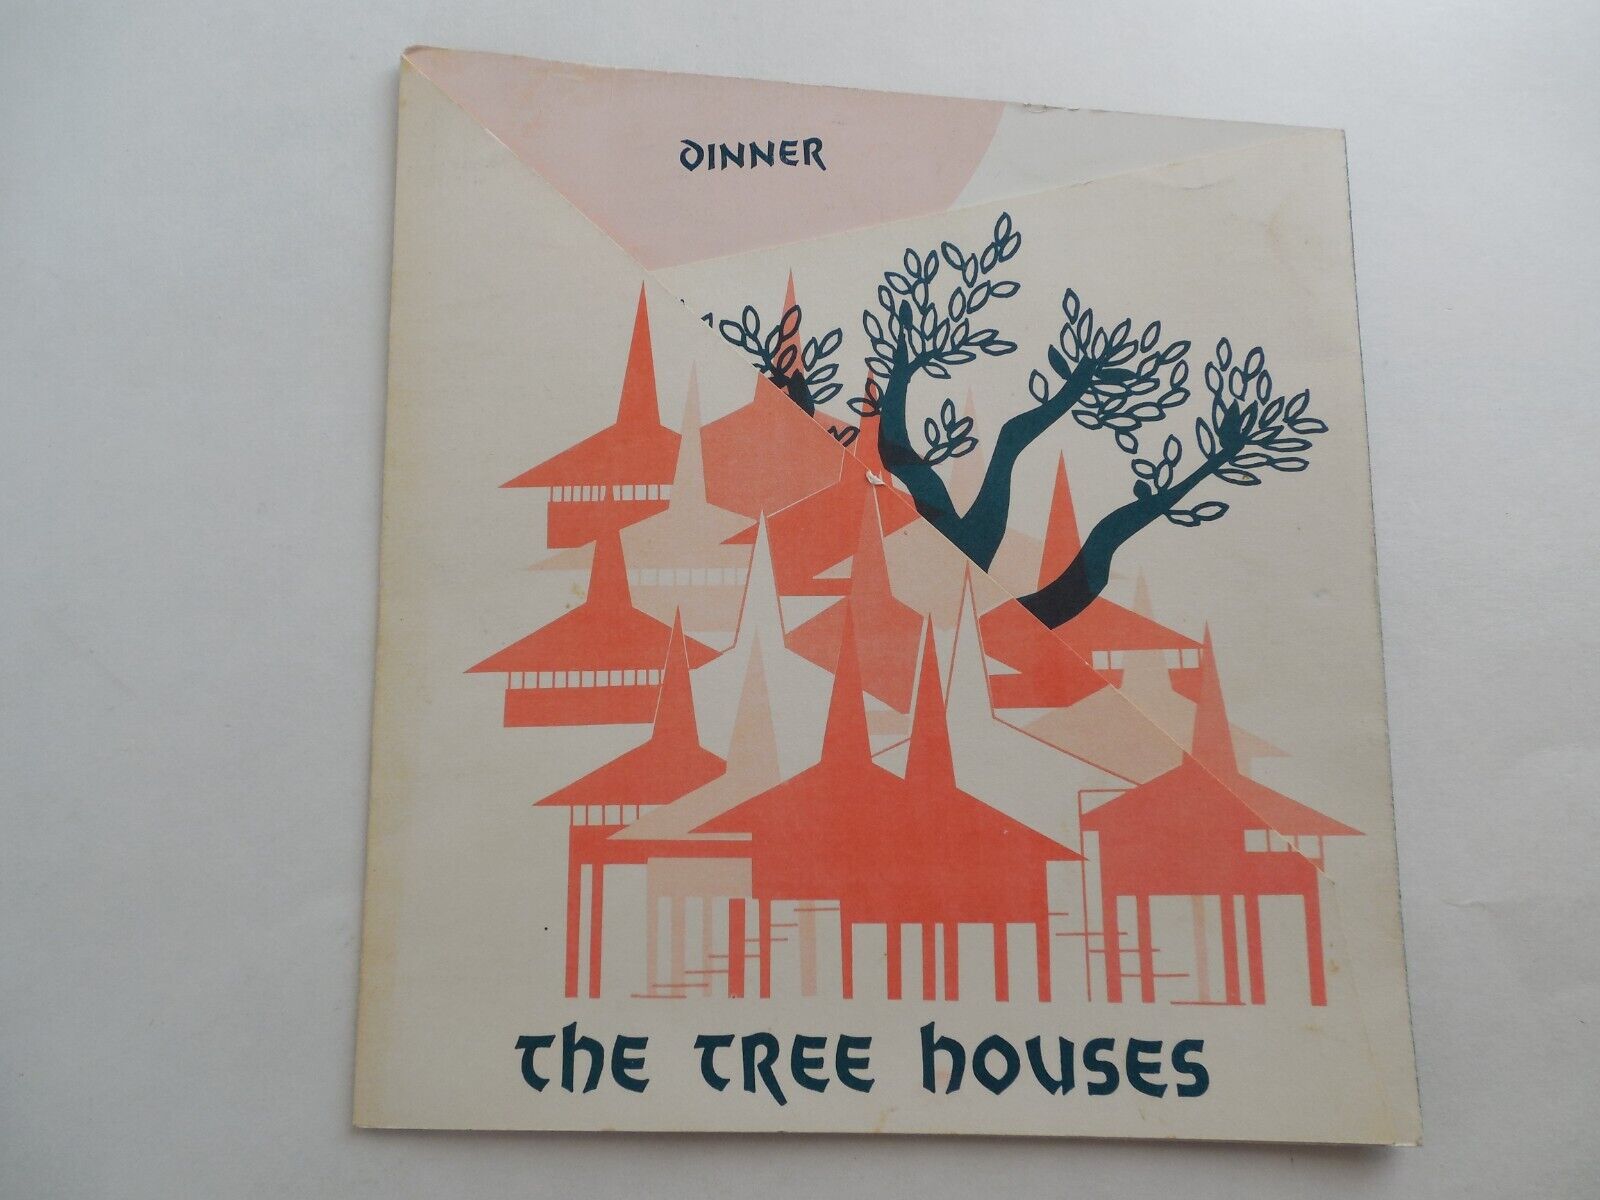 1964-65 New Yorks World's Fair African Pavilion Dinner Menu The Tree Houses